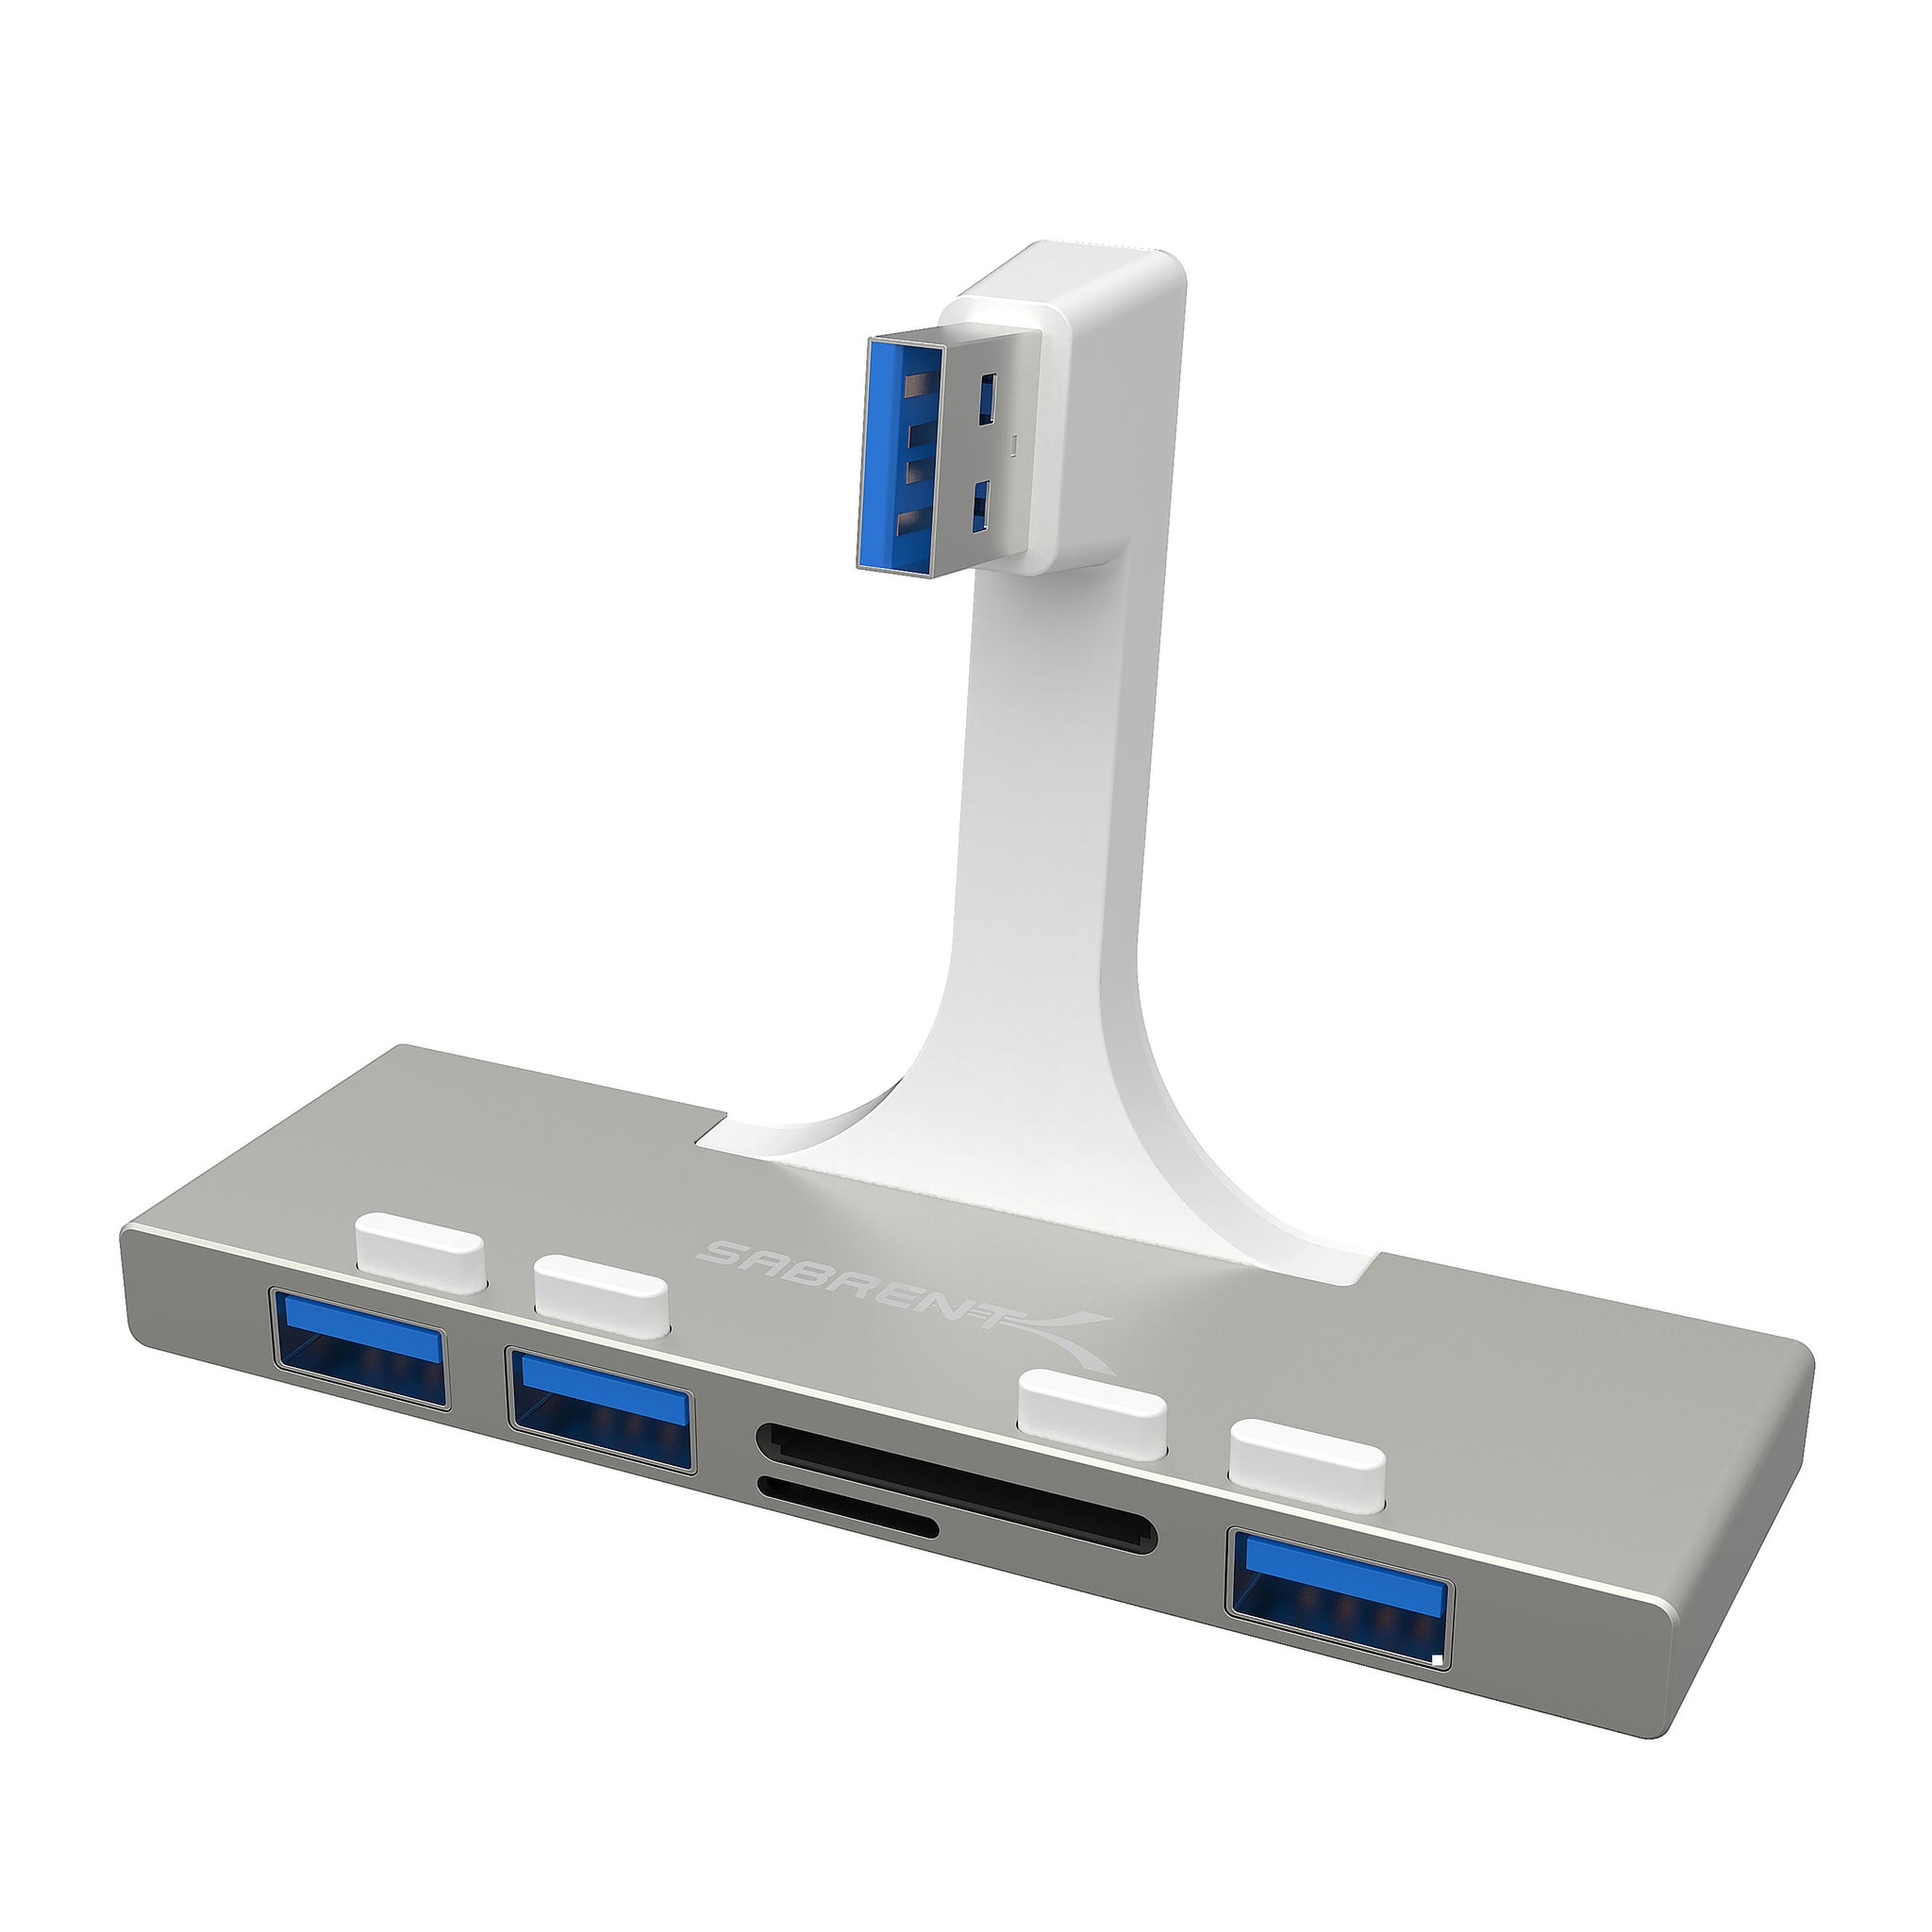 Sabrent USB 3.0 3-Port Hub and Multi-Card Reader HB-MACR B&H